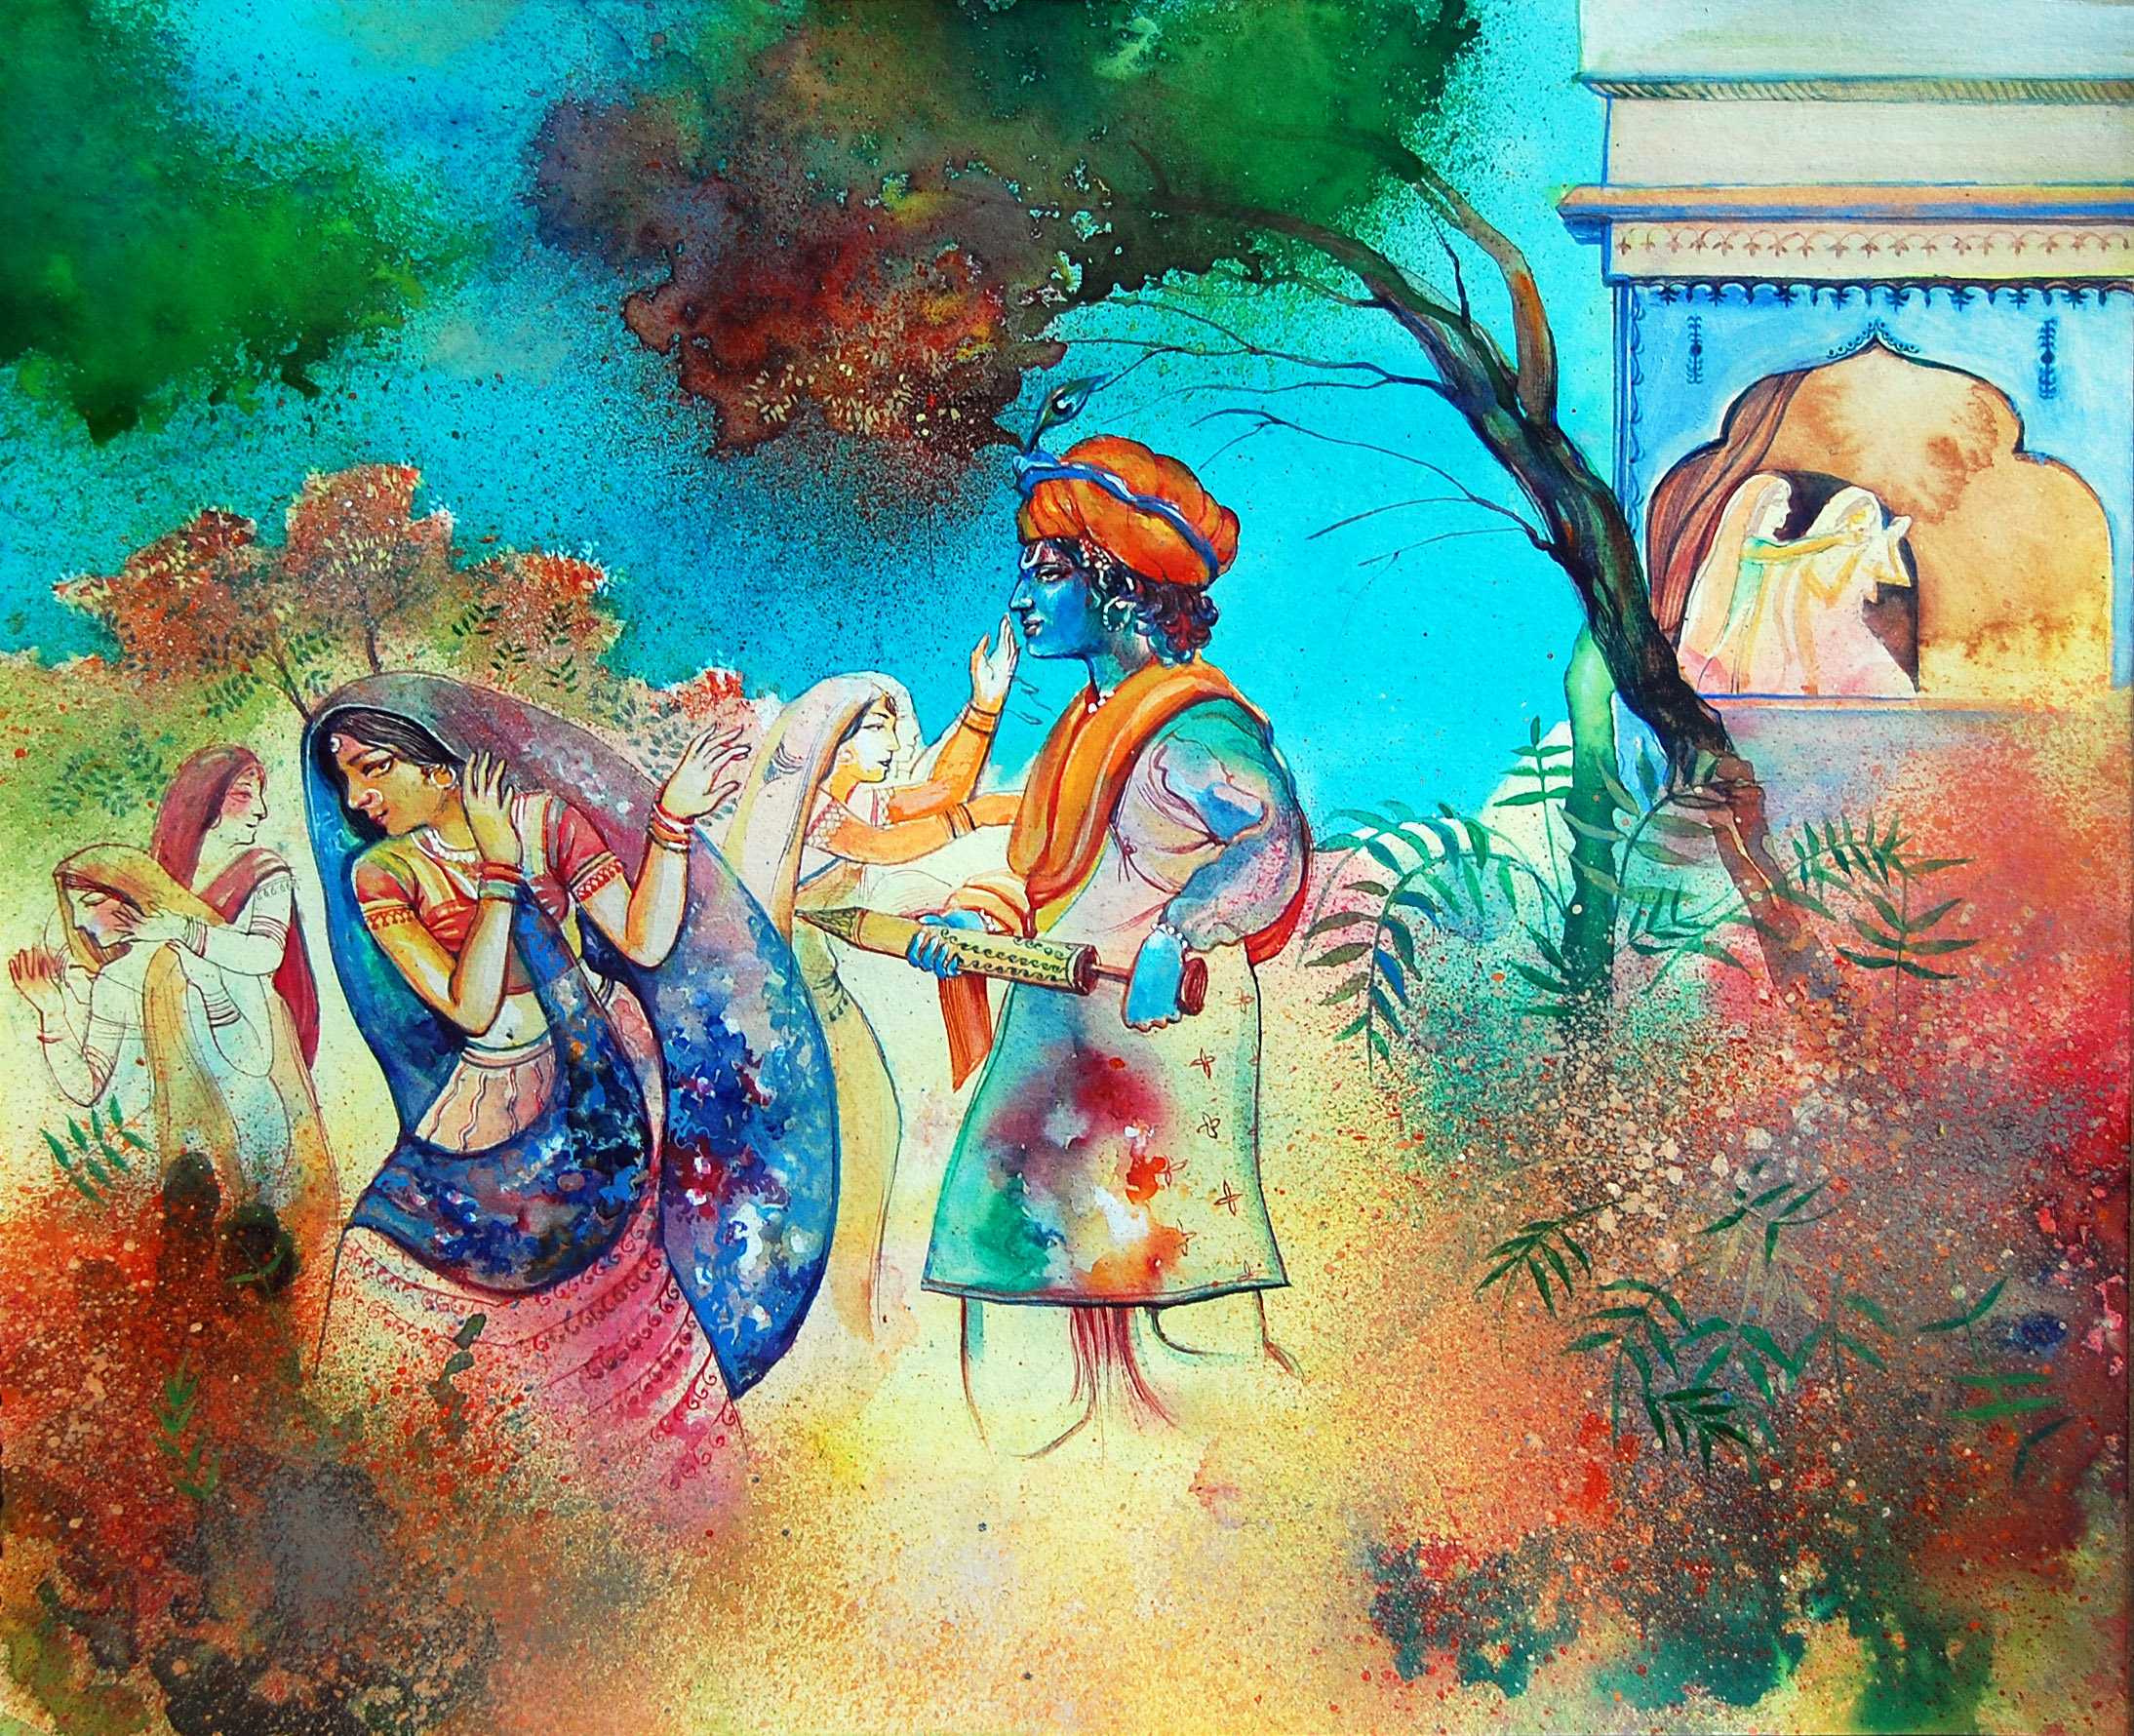 shivratri festival india